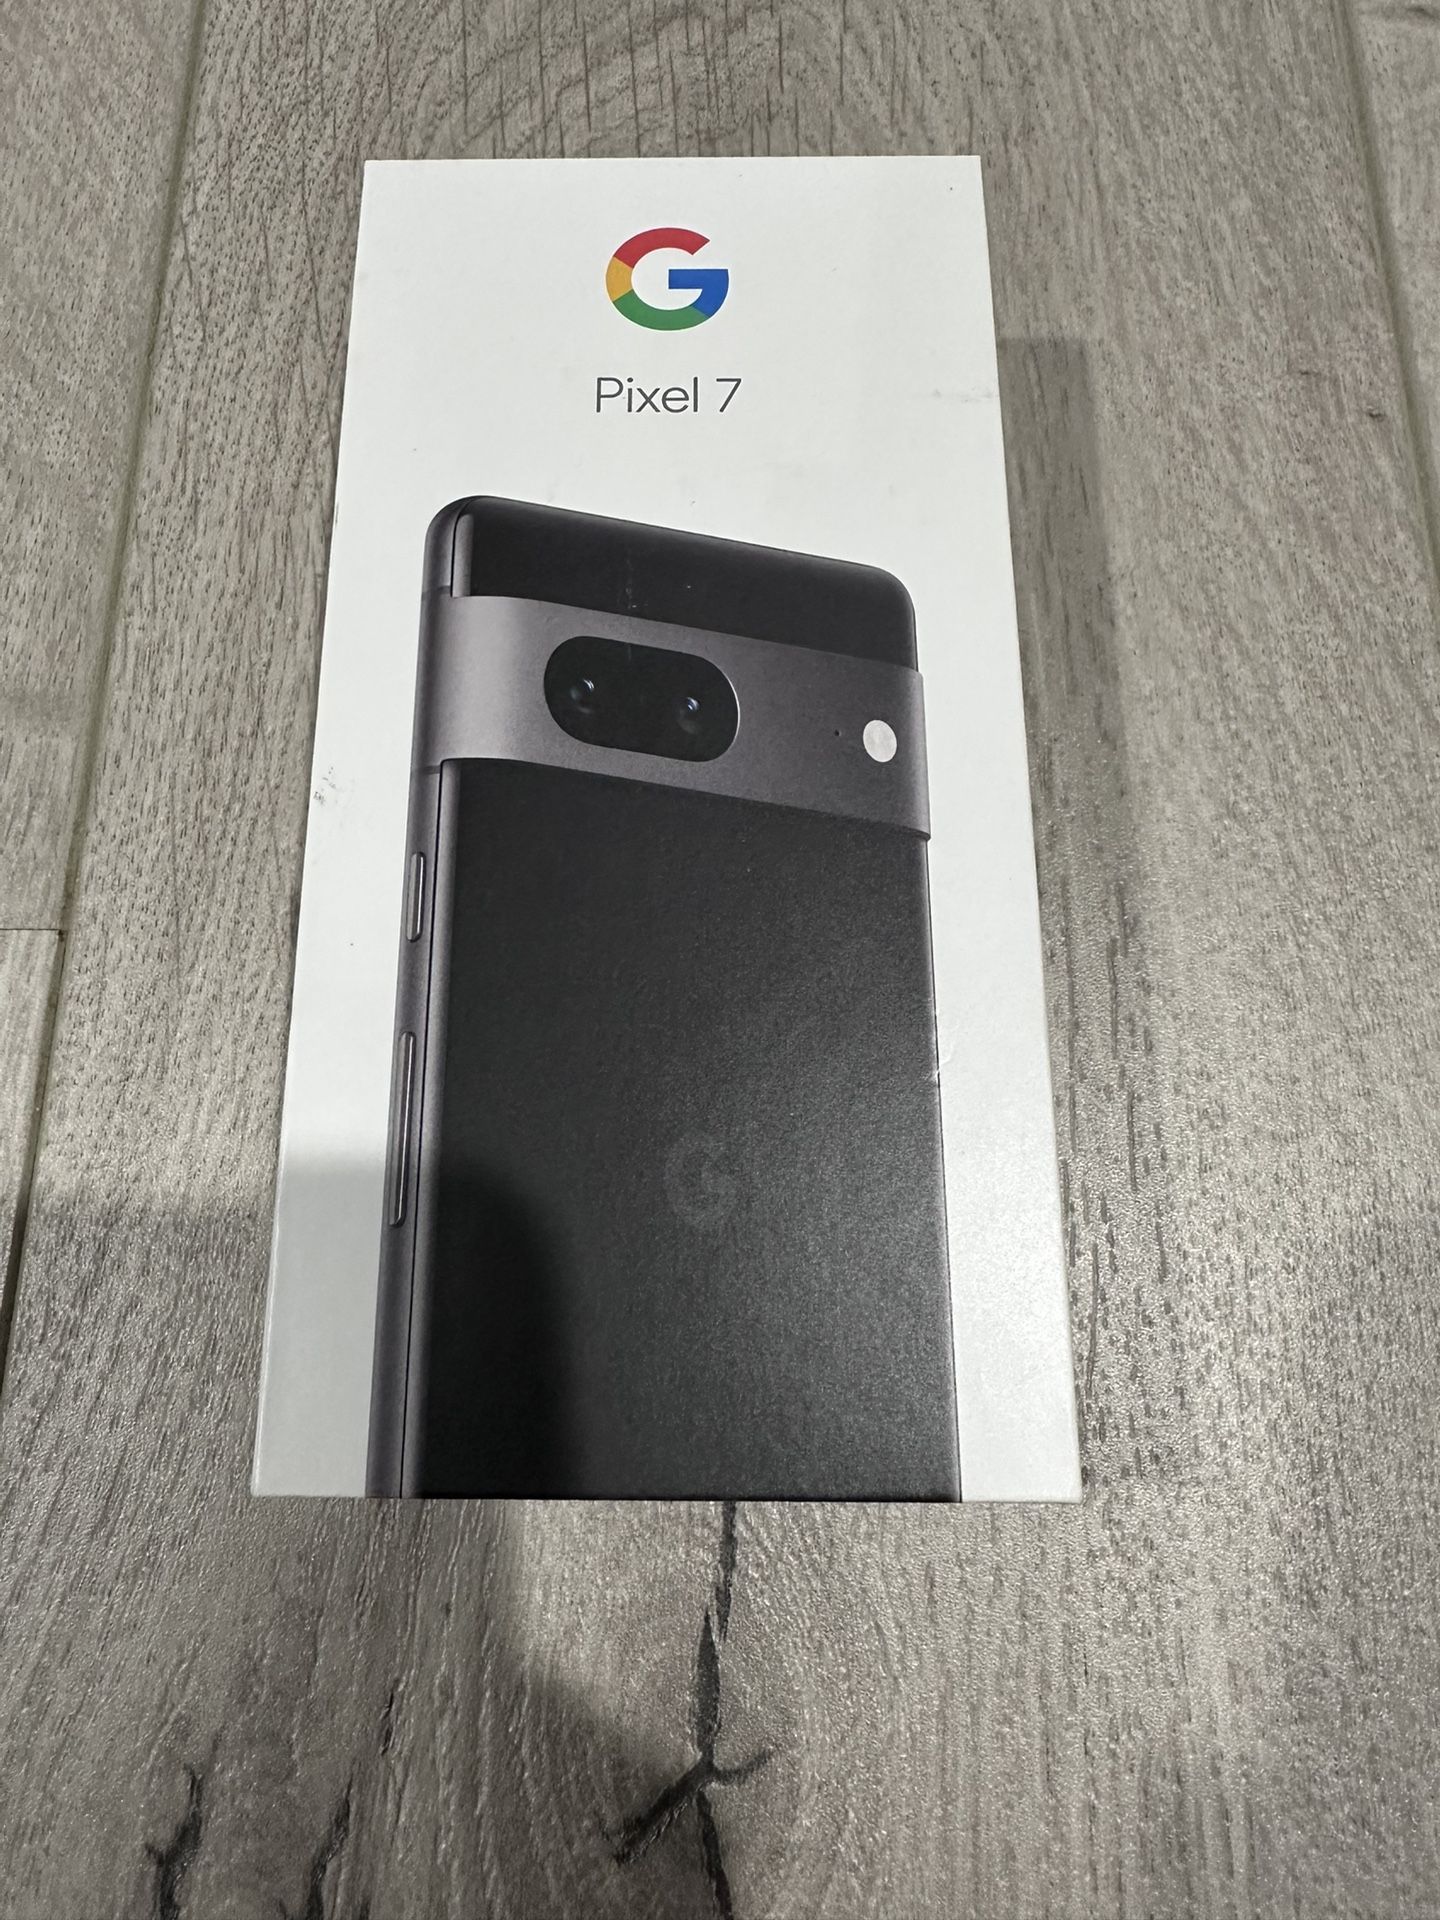 NEW Google Pixel 7 Phone (UNLOCKED, Latest Model)